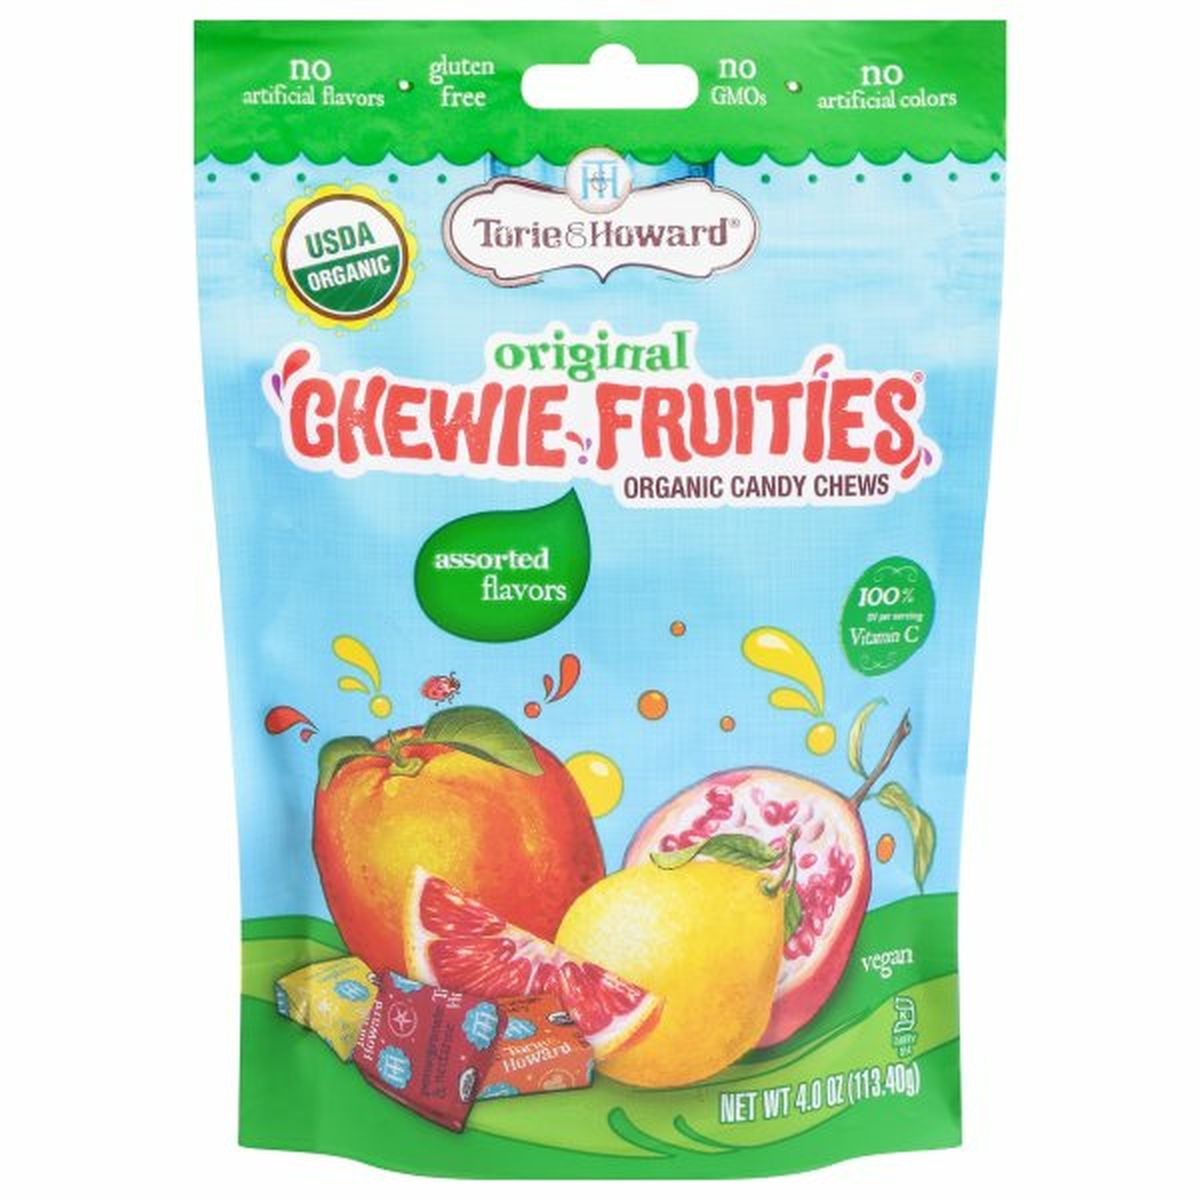 Calories in Torie & Howard Chewie Fruities Candy Chews, Organic, Assorted Flavors, Original